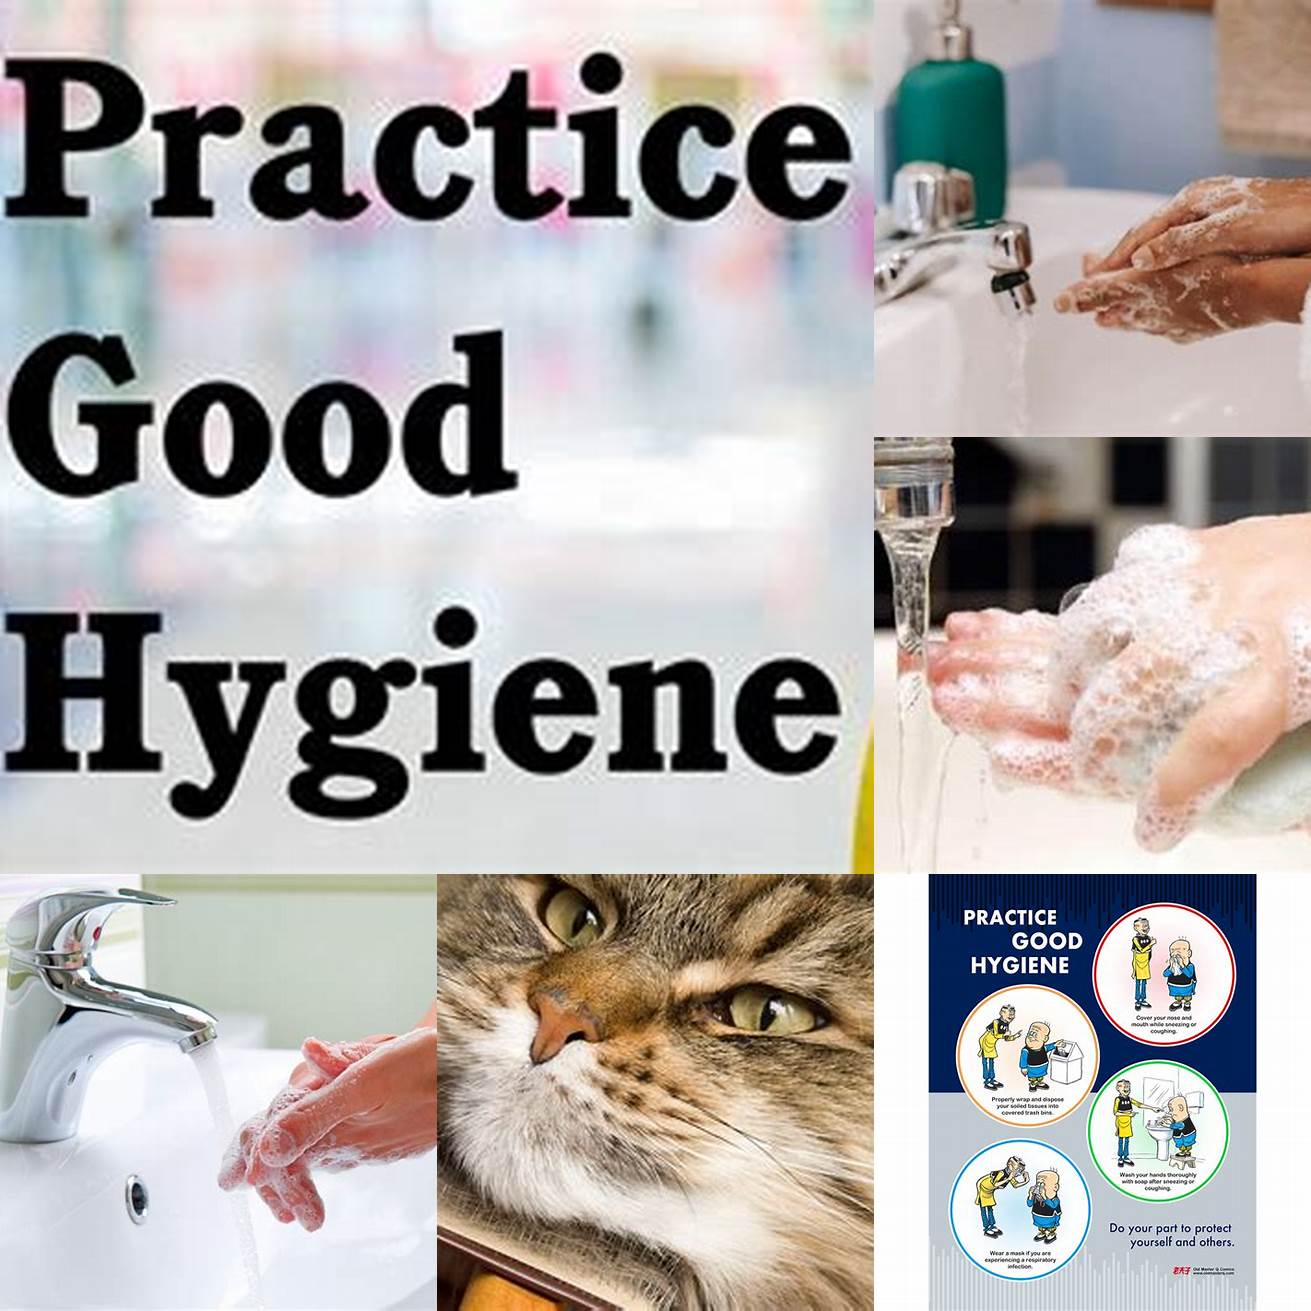 Practice good hygiene when handling your cat